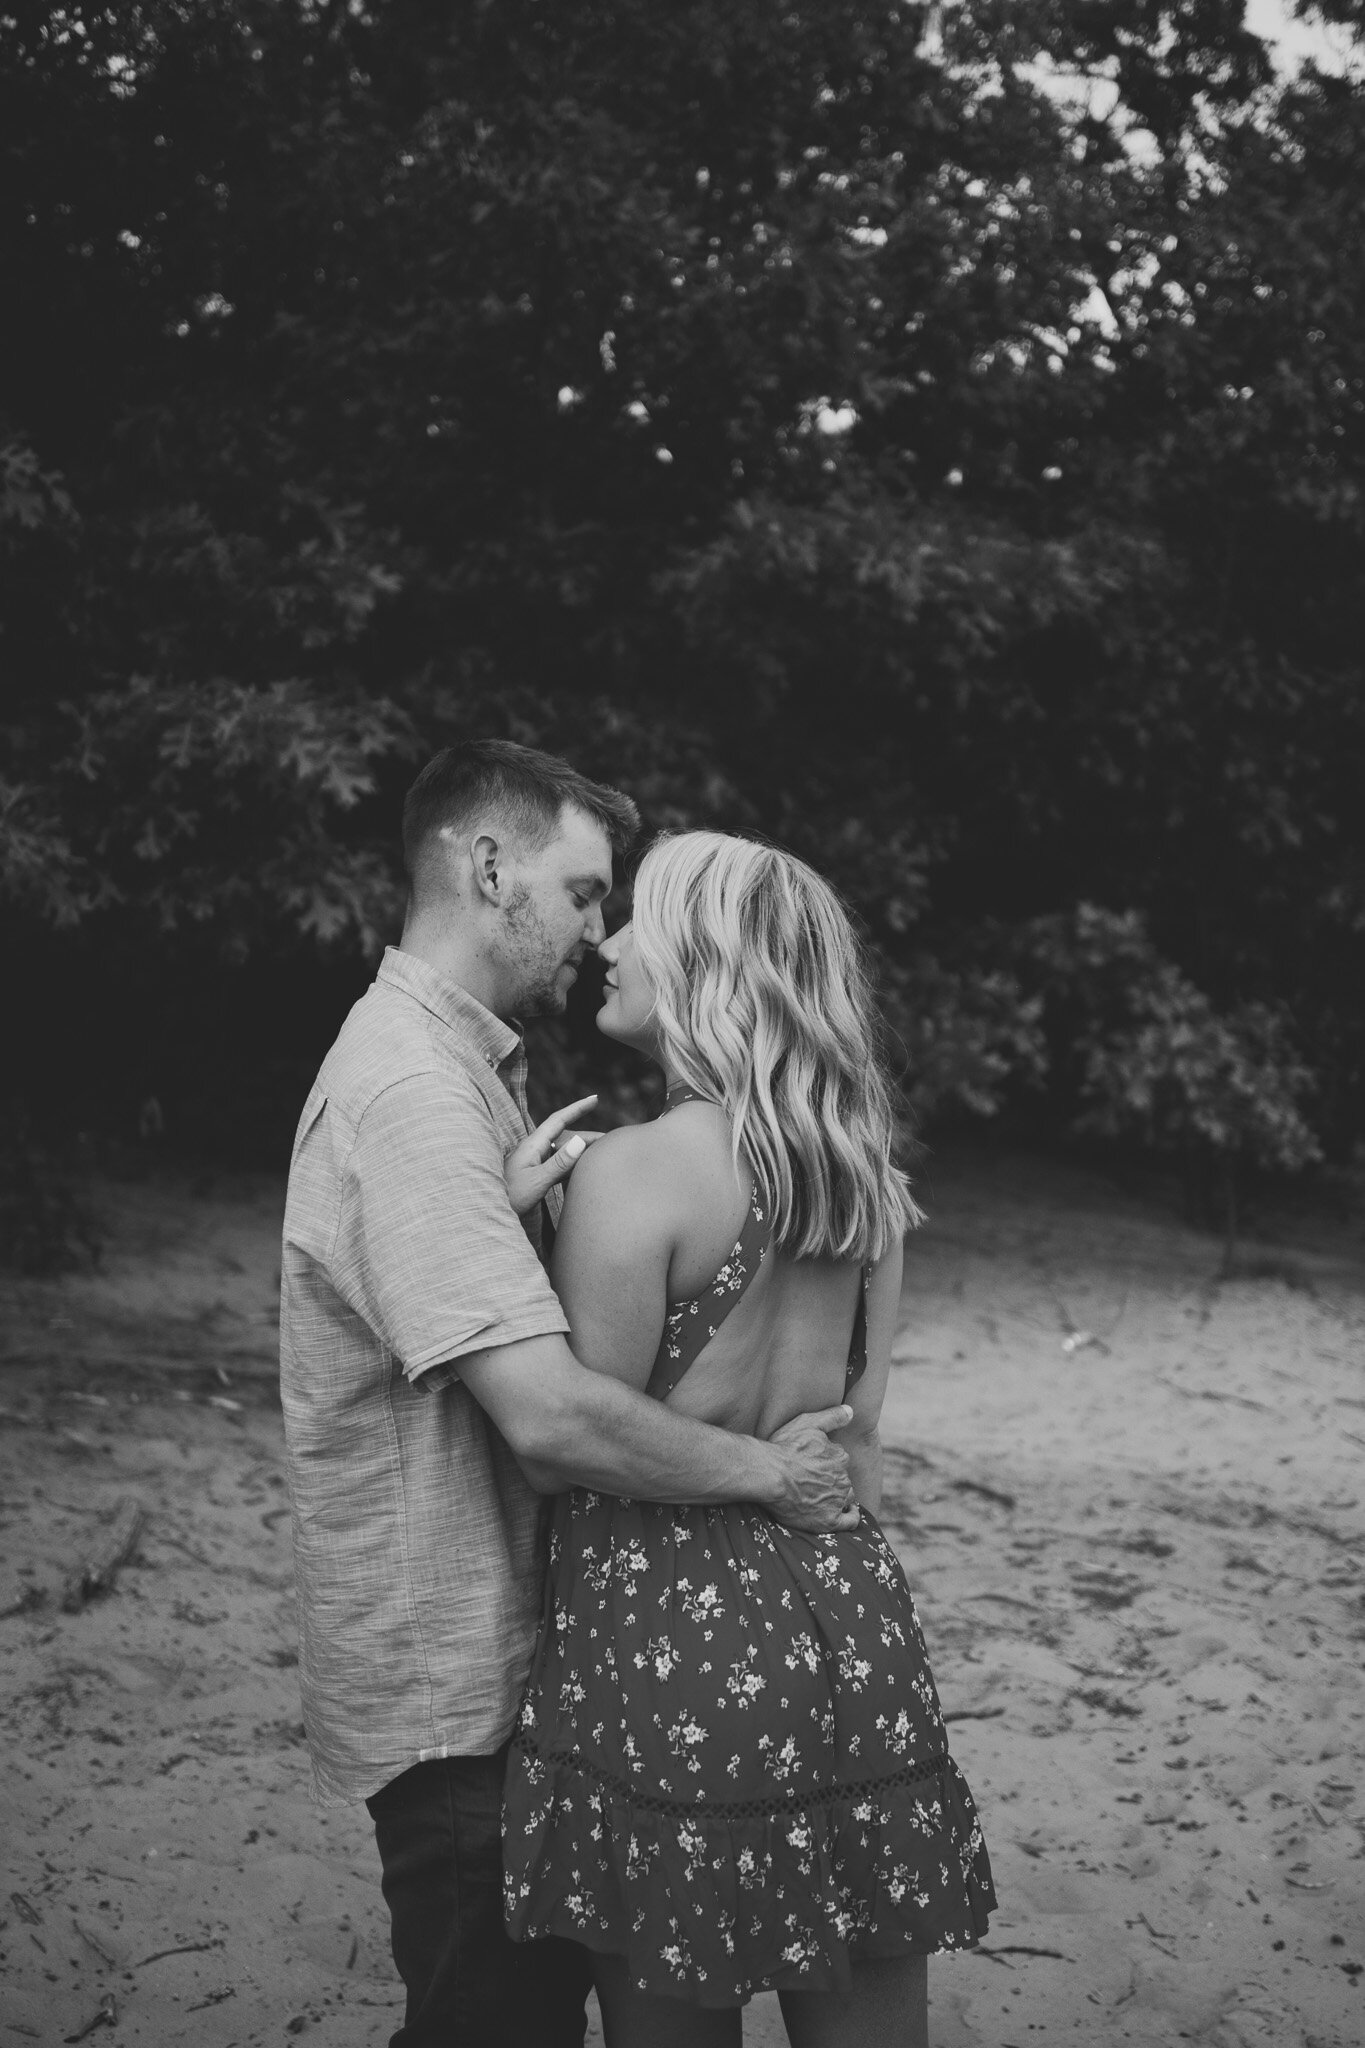 Chris and Kaleen Summer 2020 - Provin Trails - Grand Rapids Wedding Photographer - West Michigan Wedding Photographer - J Darling Photo 014.jpg